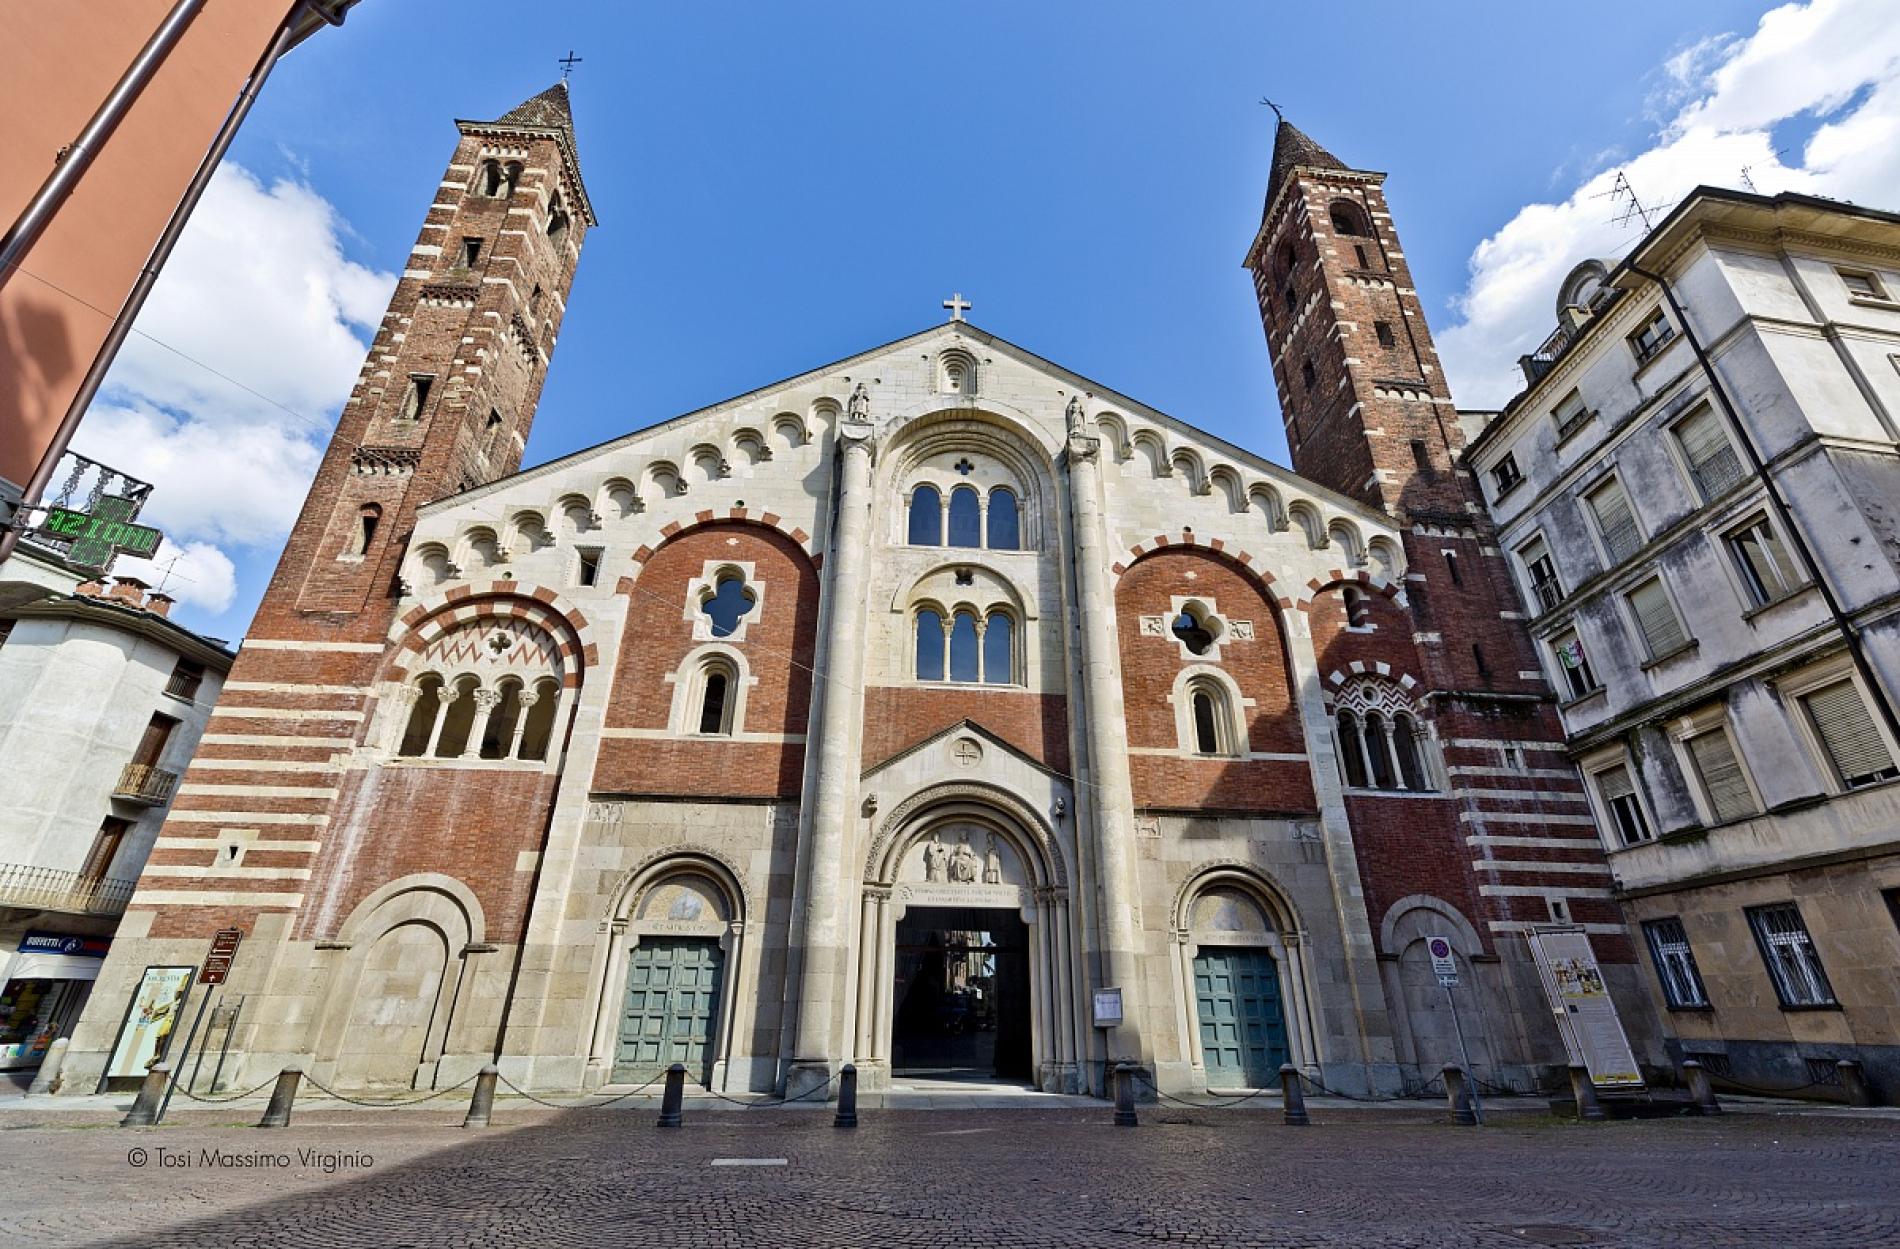 Casale, due mostre al Museo del Duomo e alla biblioteca del Seminario